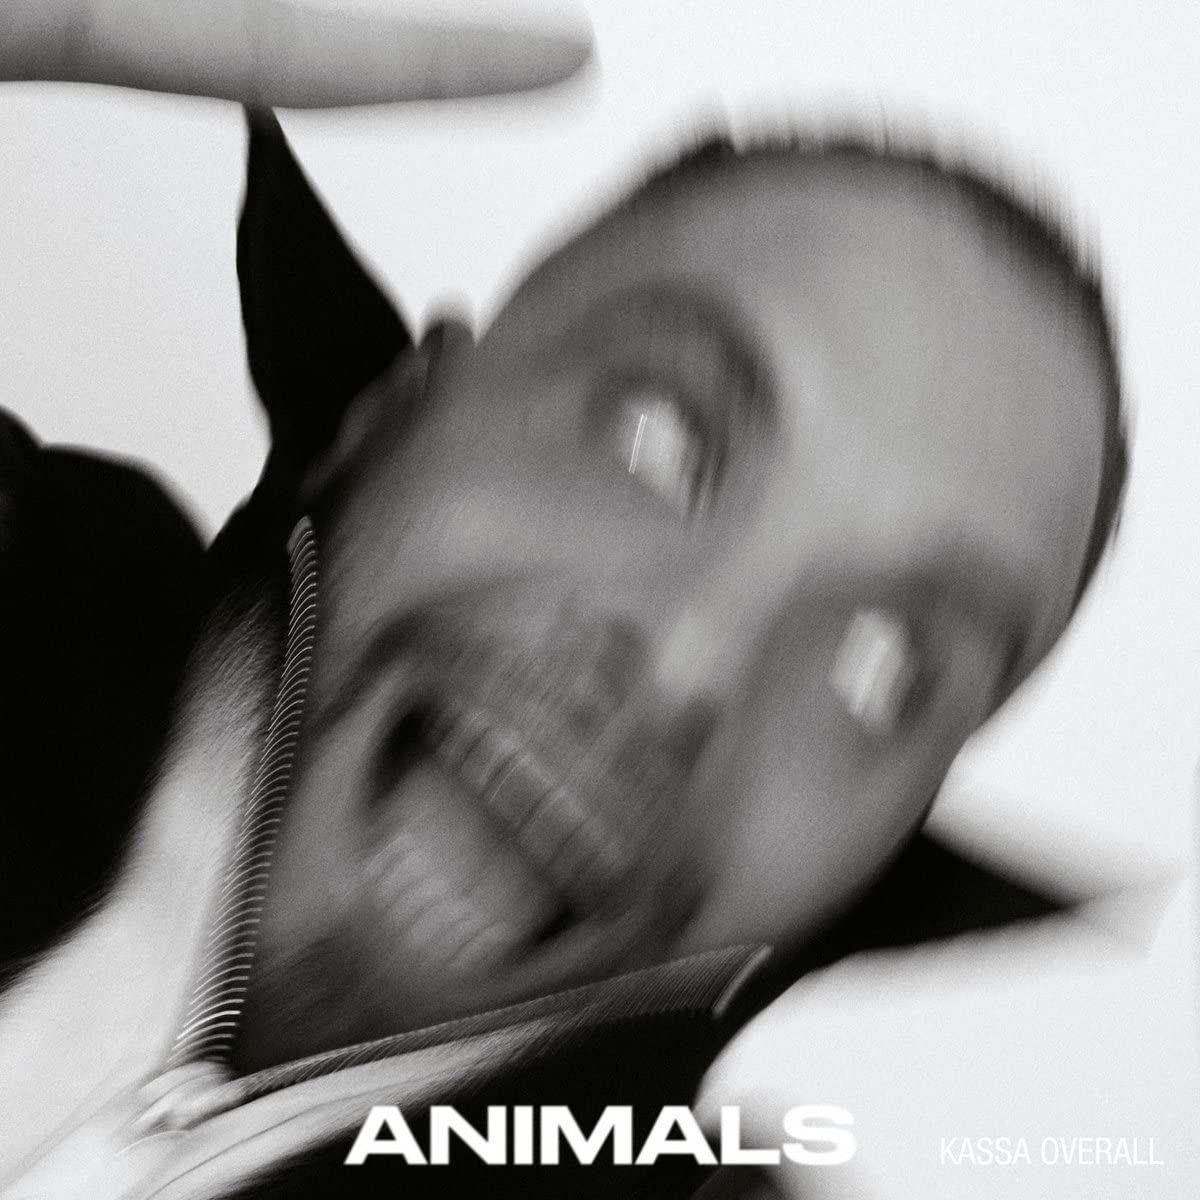 KASSA OVERALL - Animals cover 